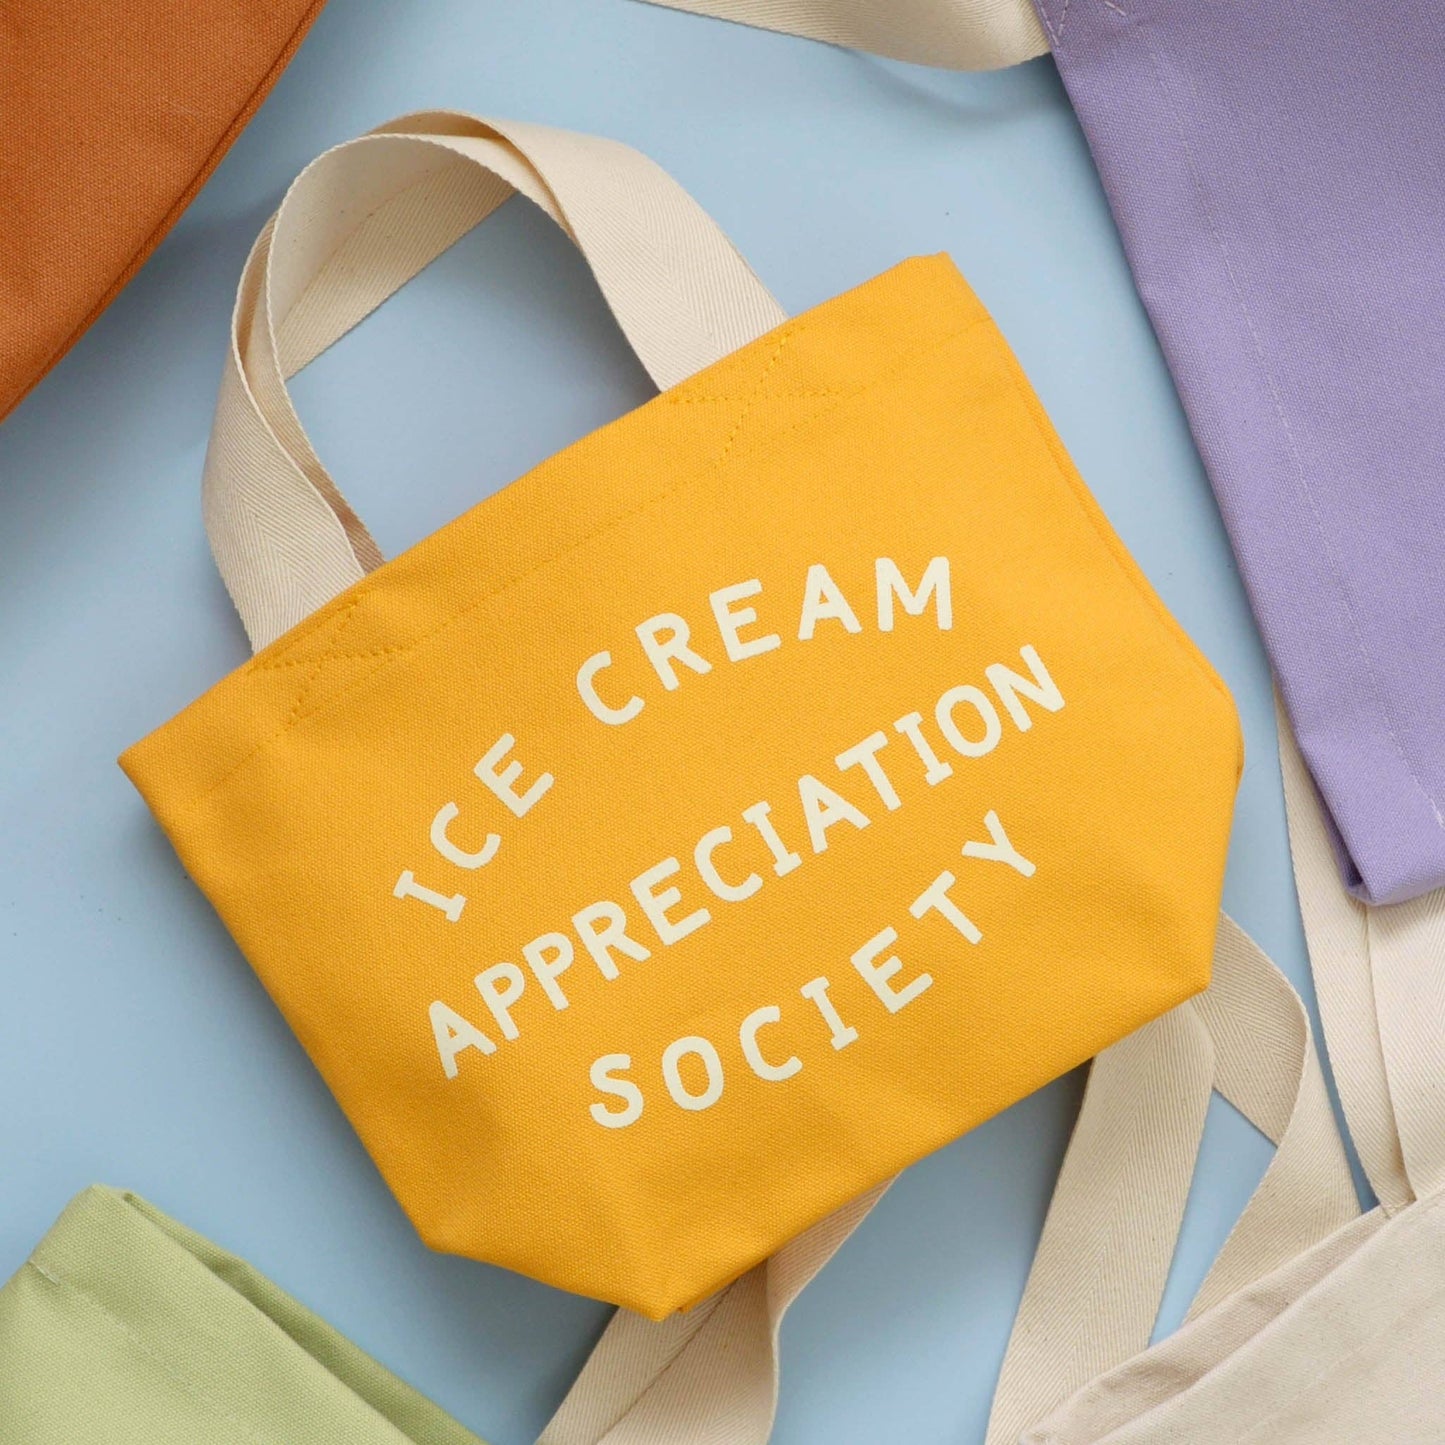 Alphabet Bags - Ice Cream Appreciation Society - Little Yellow Bag